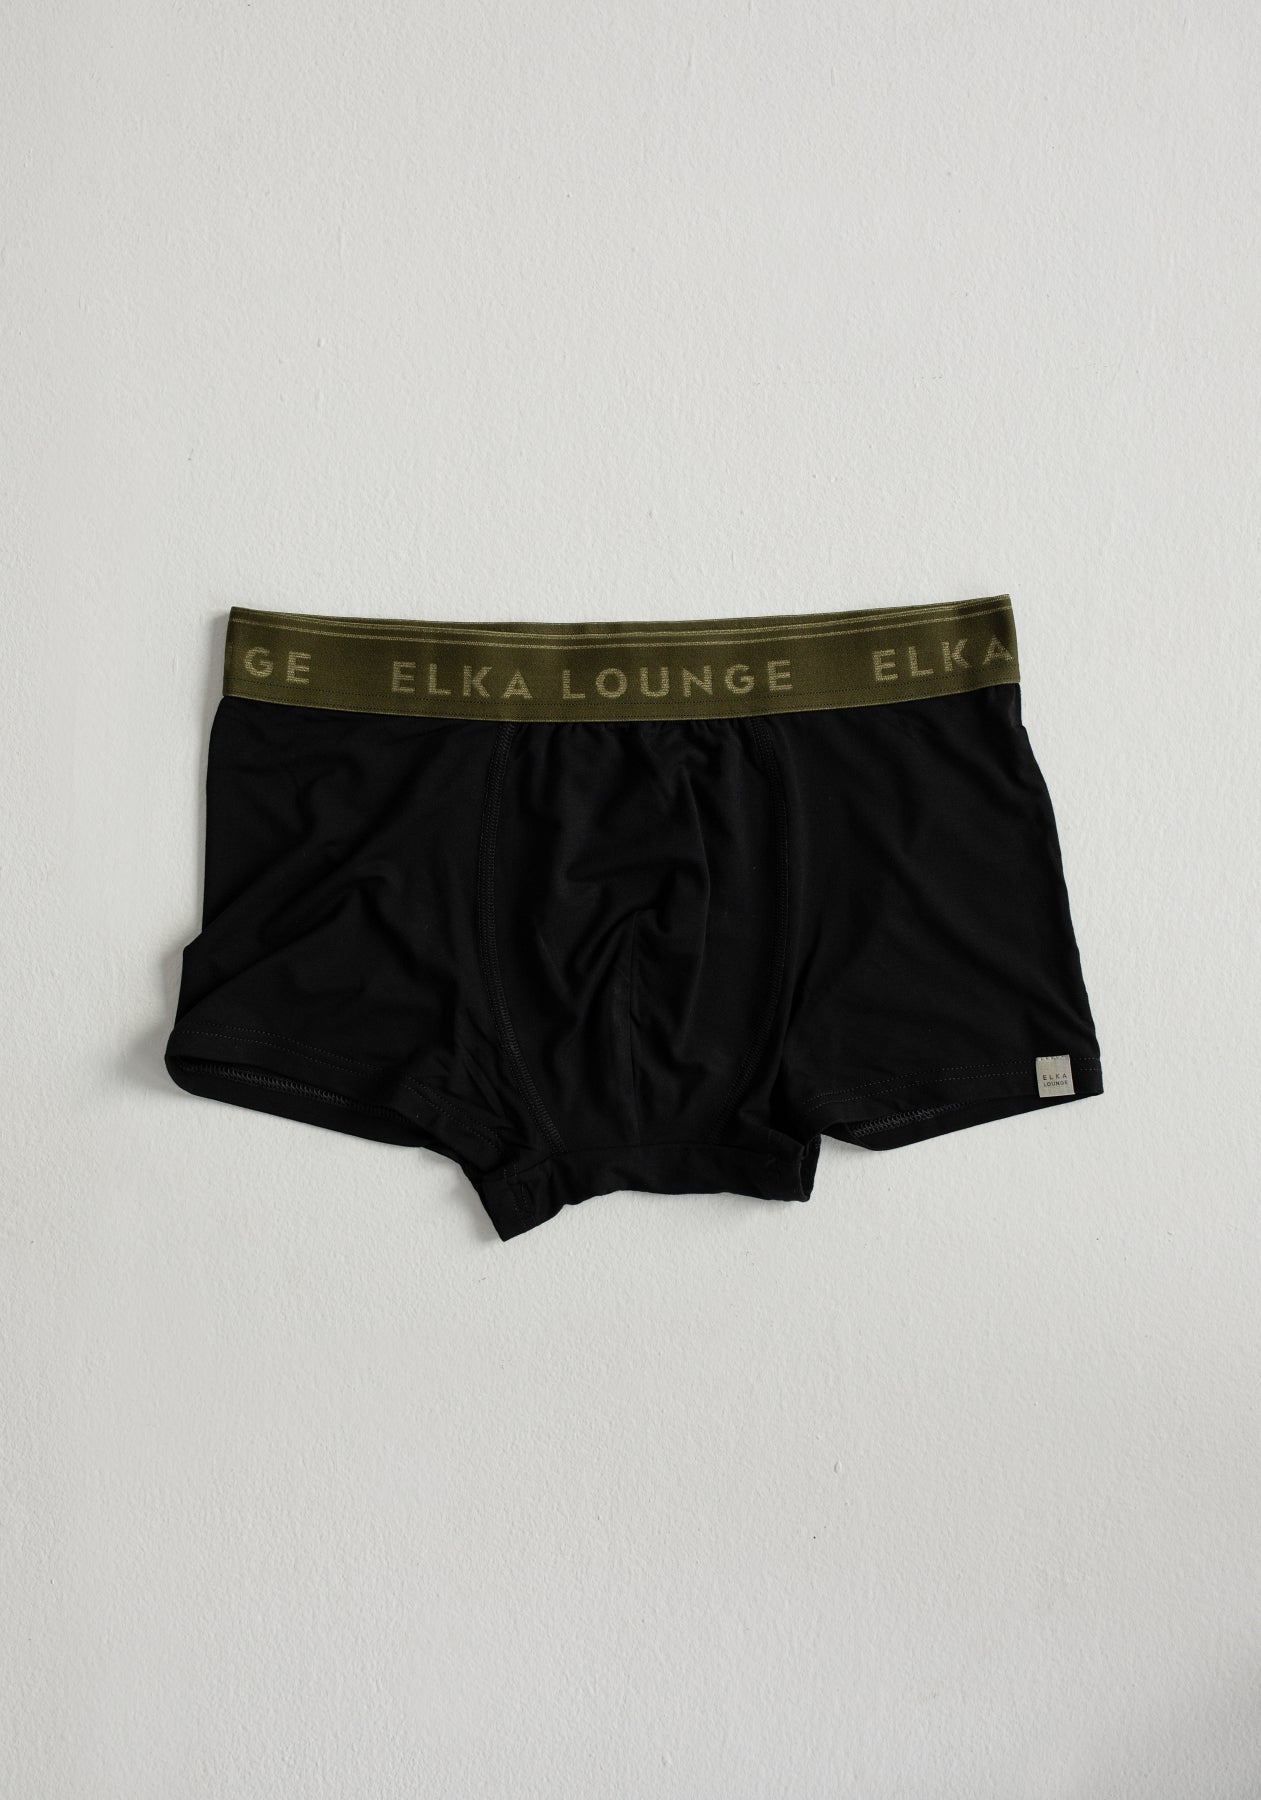 Men's underwear - ELKA LOUNGE